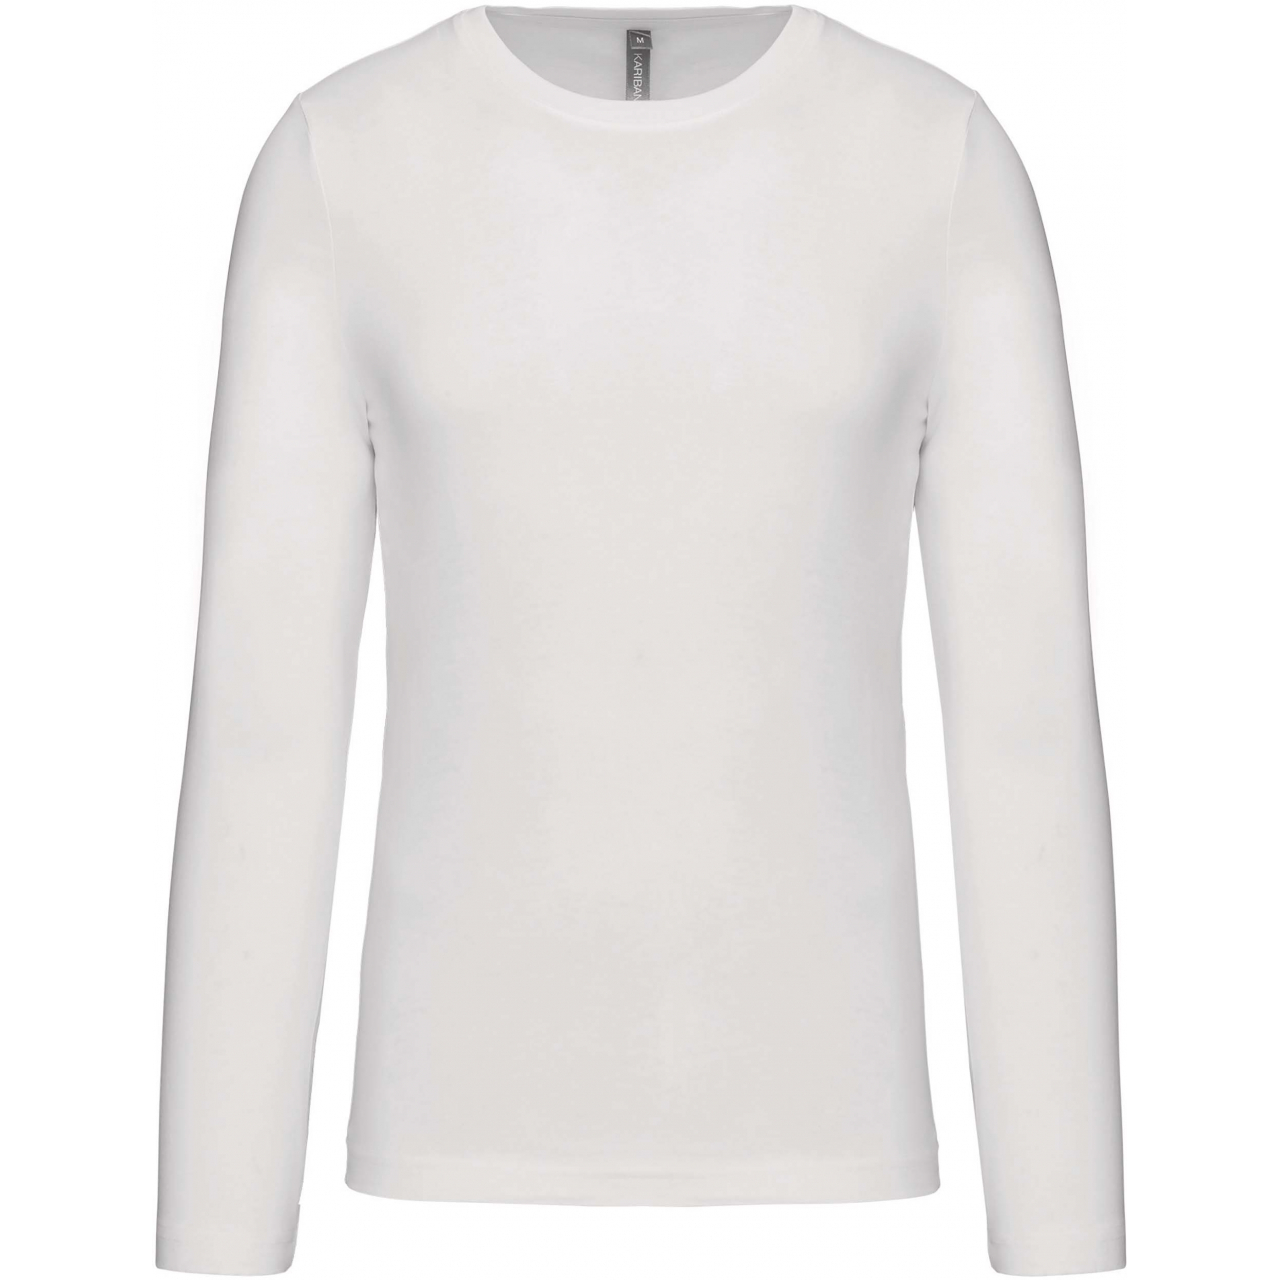 Pánské tričko Kariban dlouhý rukáv - bílé, XL